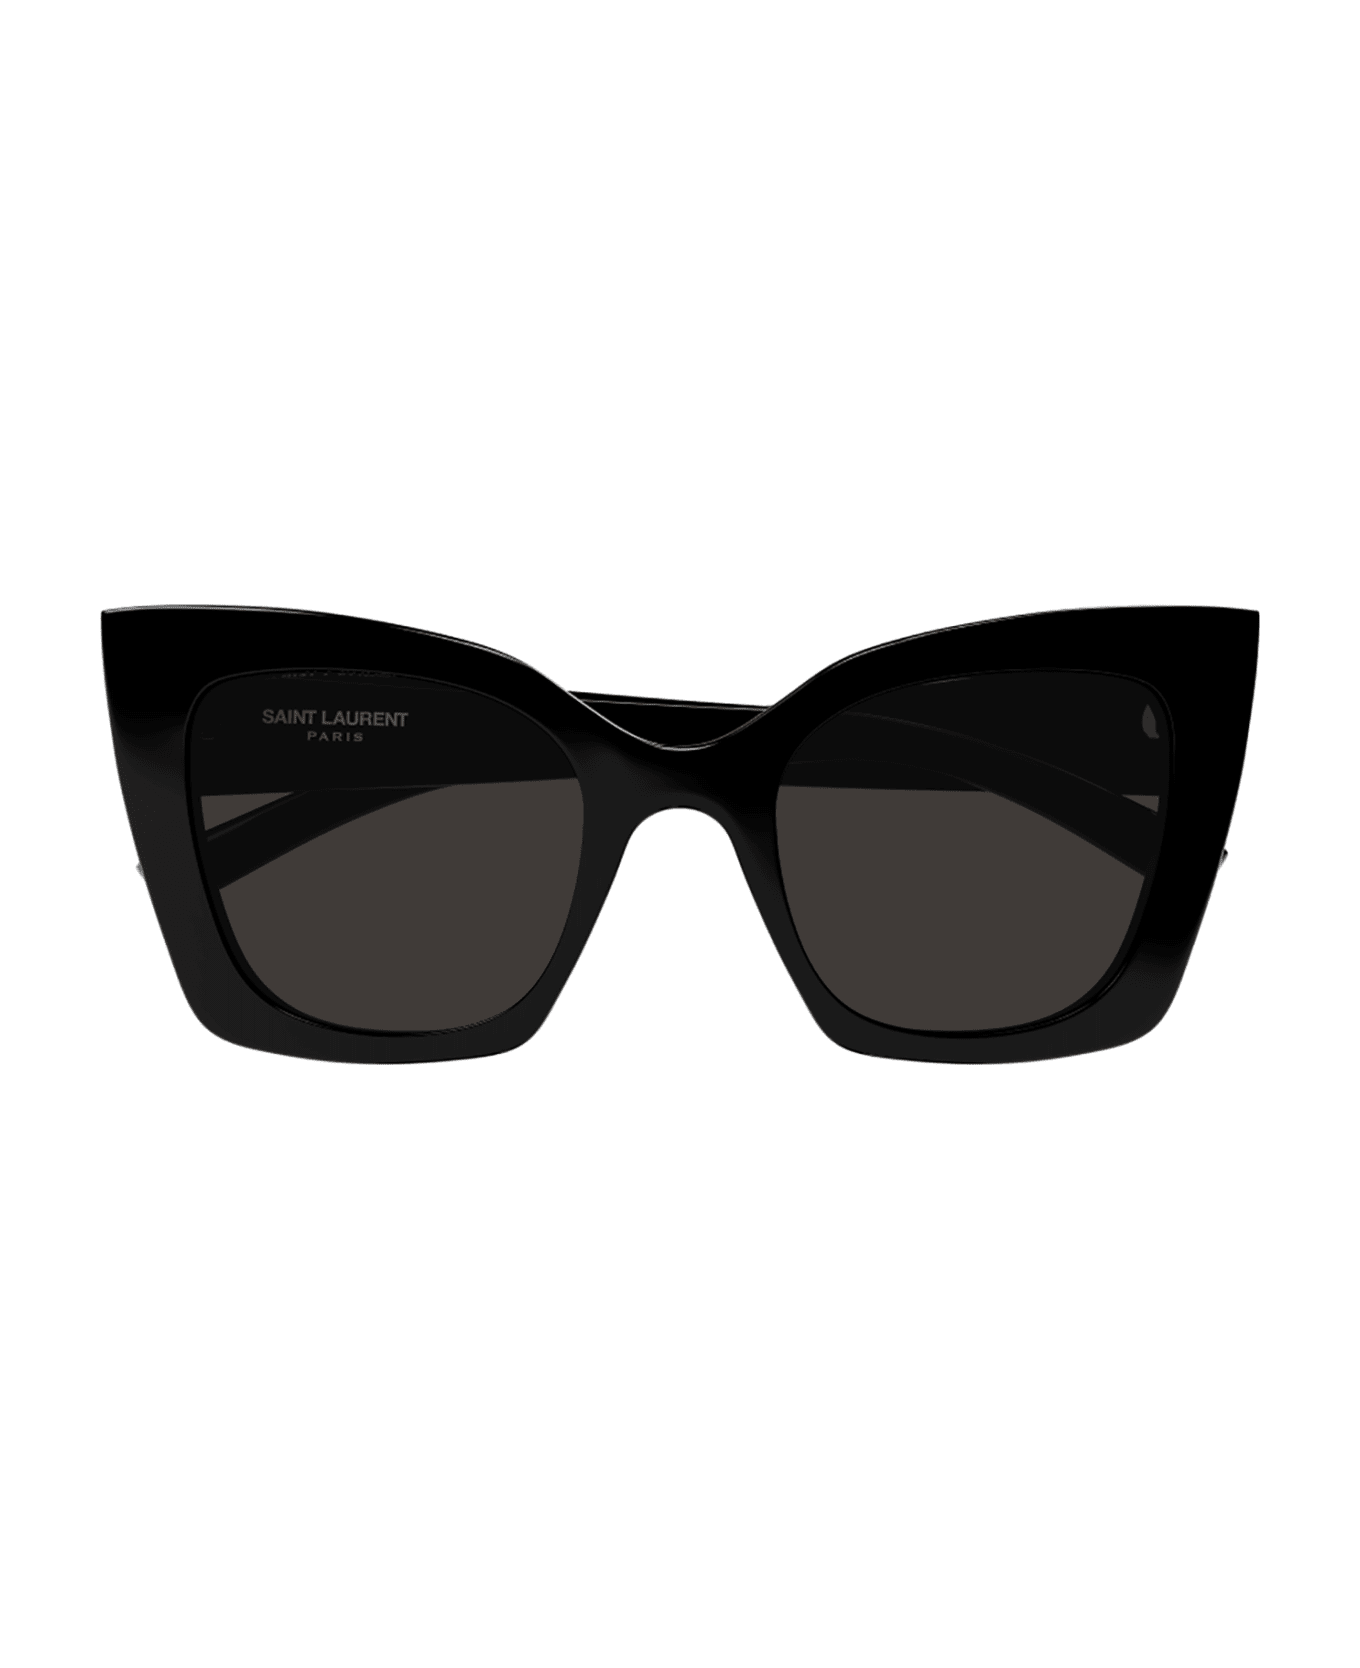 Saint Laurent Eyewear 1e784id0a - sunglasses from New York label